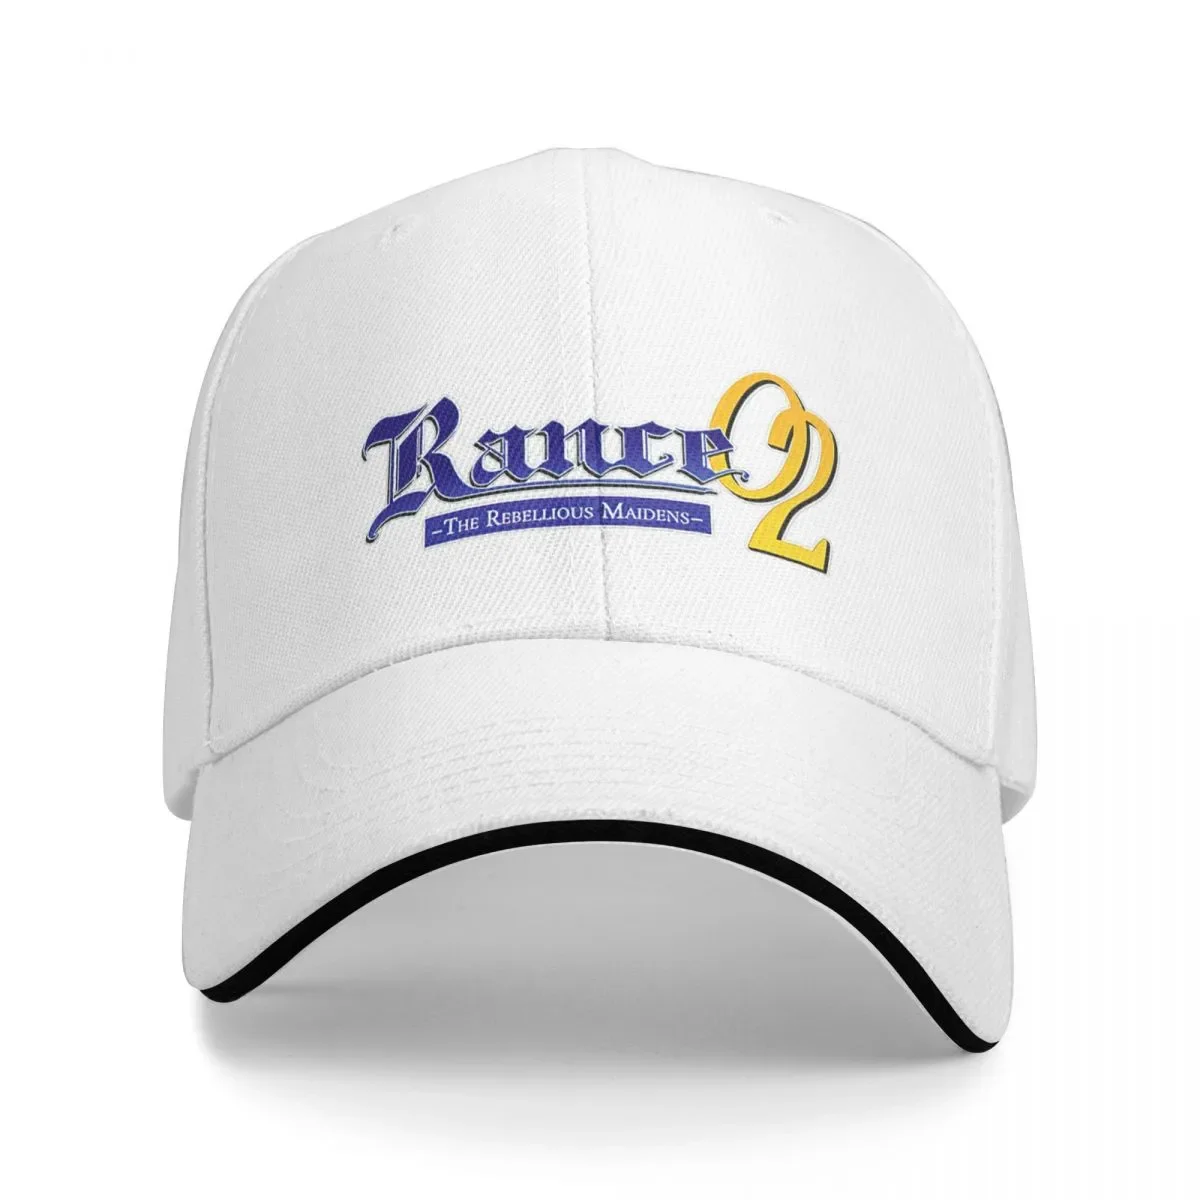 

New Rance 02 Logo Cap Baseball Cap new in the hat uv protection solar hat kids hat Golf wear men Women's